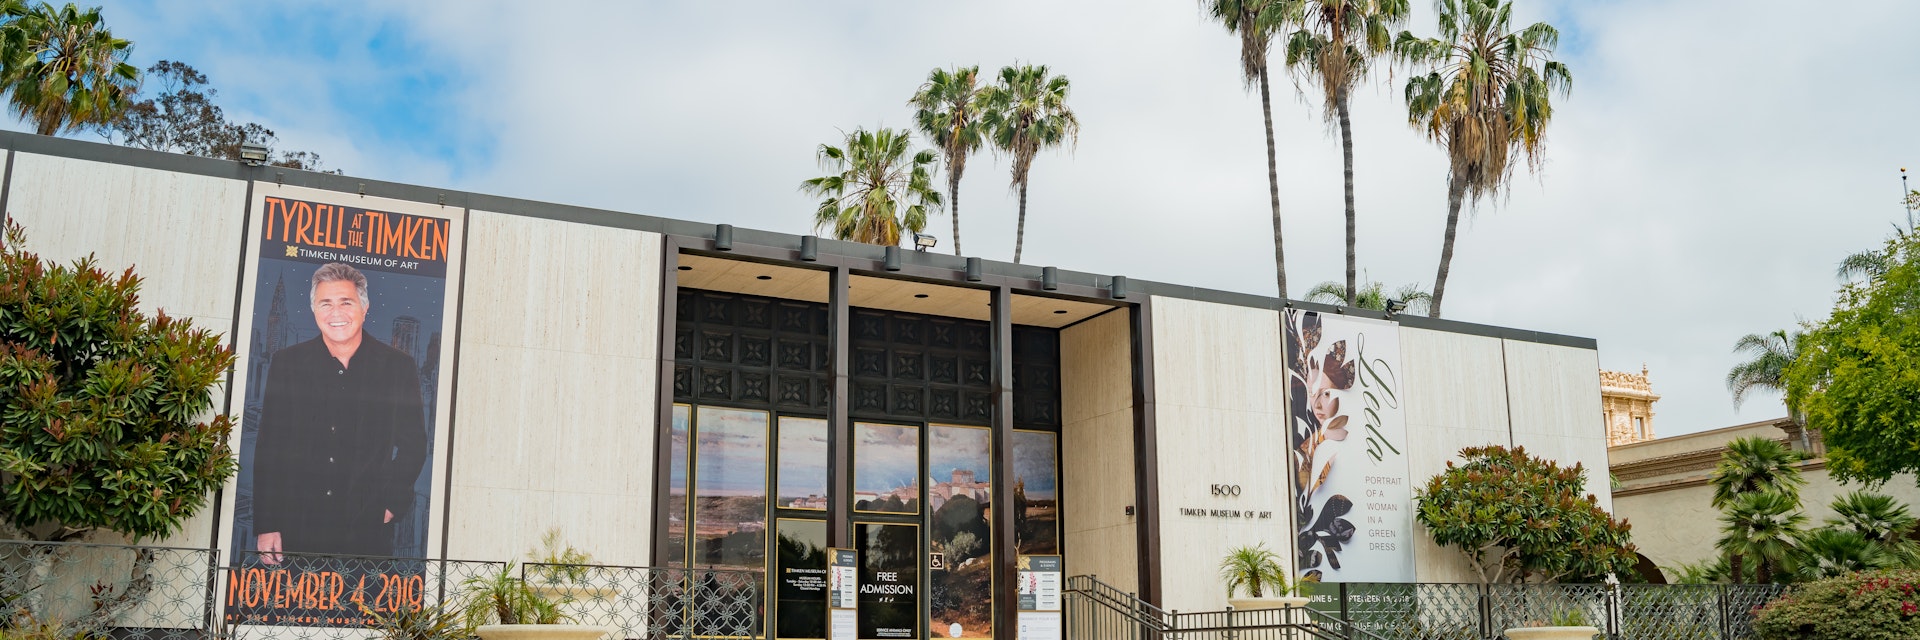 San Diego, JUN 27: Timken Museum of Art in the beautiful and historical Balboa Park on JUN 27, 2018 at San Diego, California; Shutterstock ID 1133465582; GL: 65050; netsuite: Online editorial; full: POI updates: San Diego; name: Ann Douglas Lott
1133465582